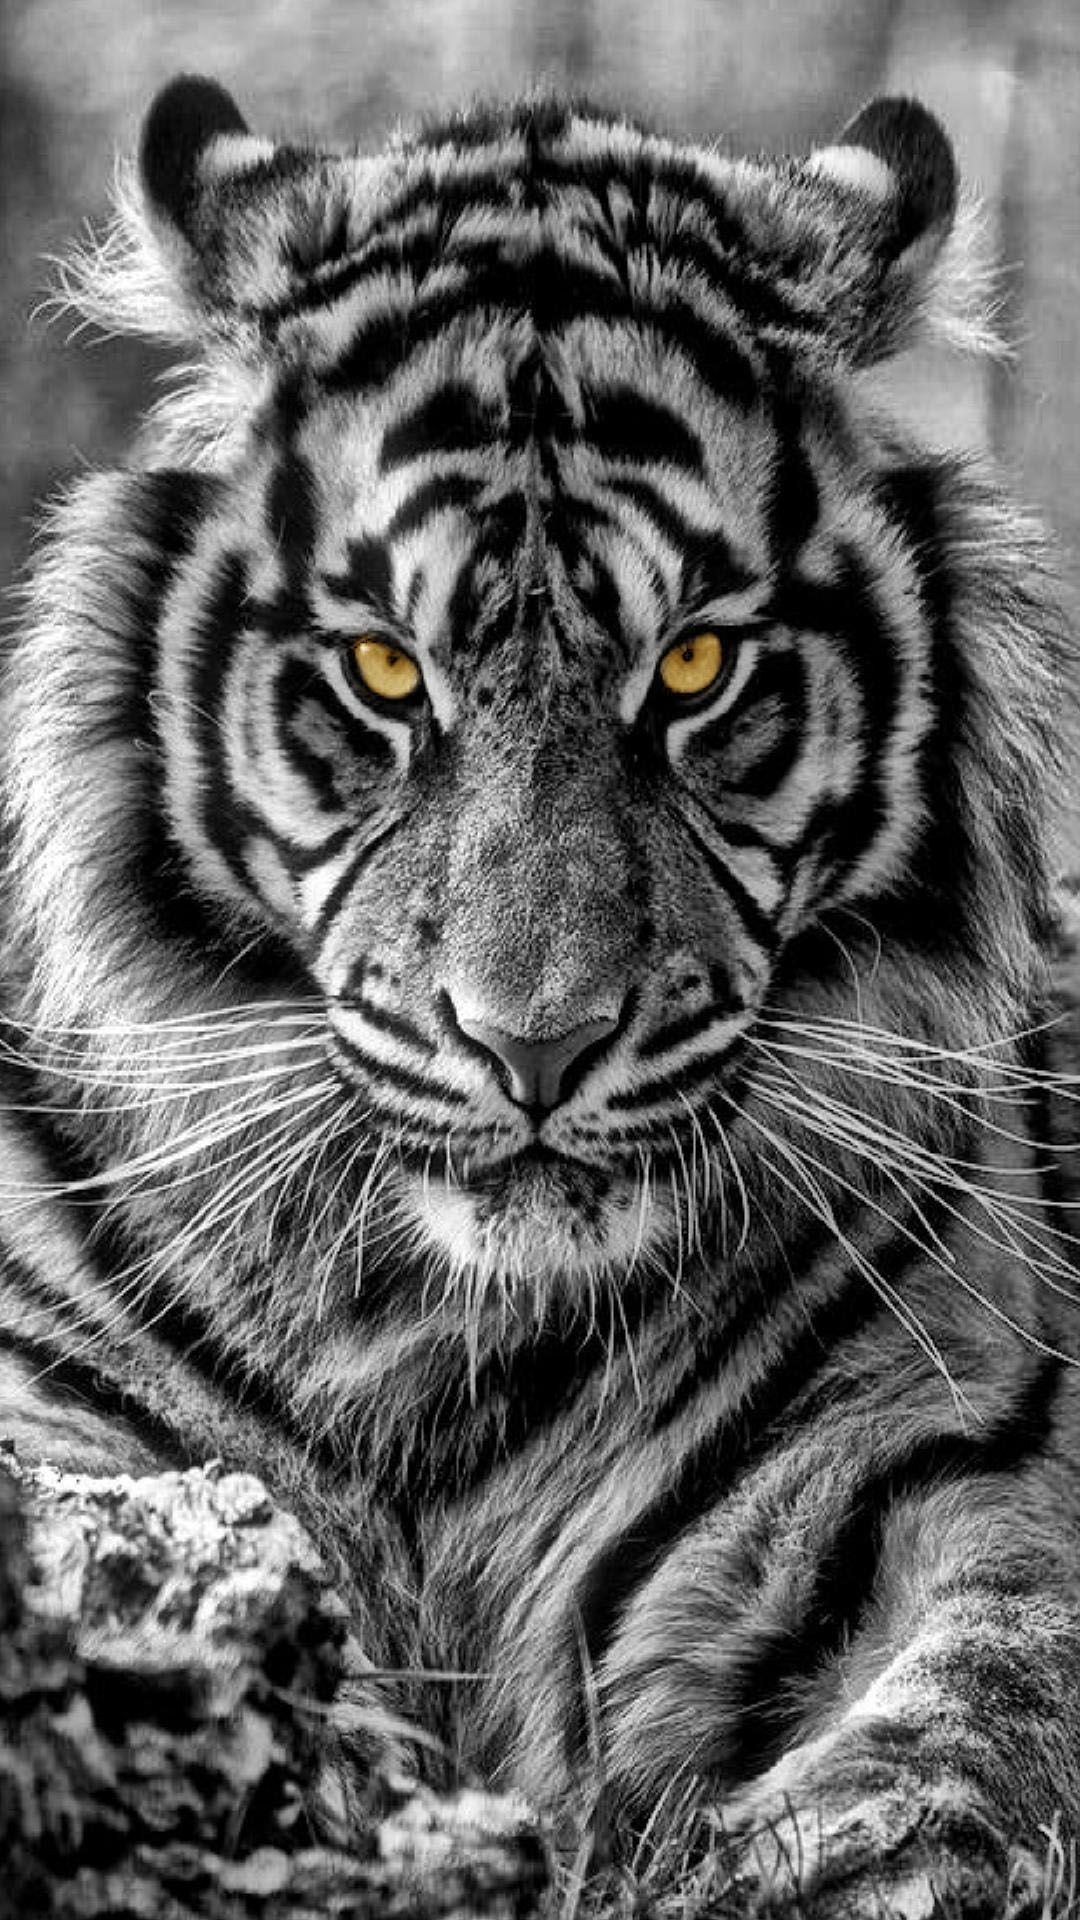 Wallpaper Tiger